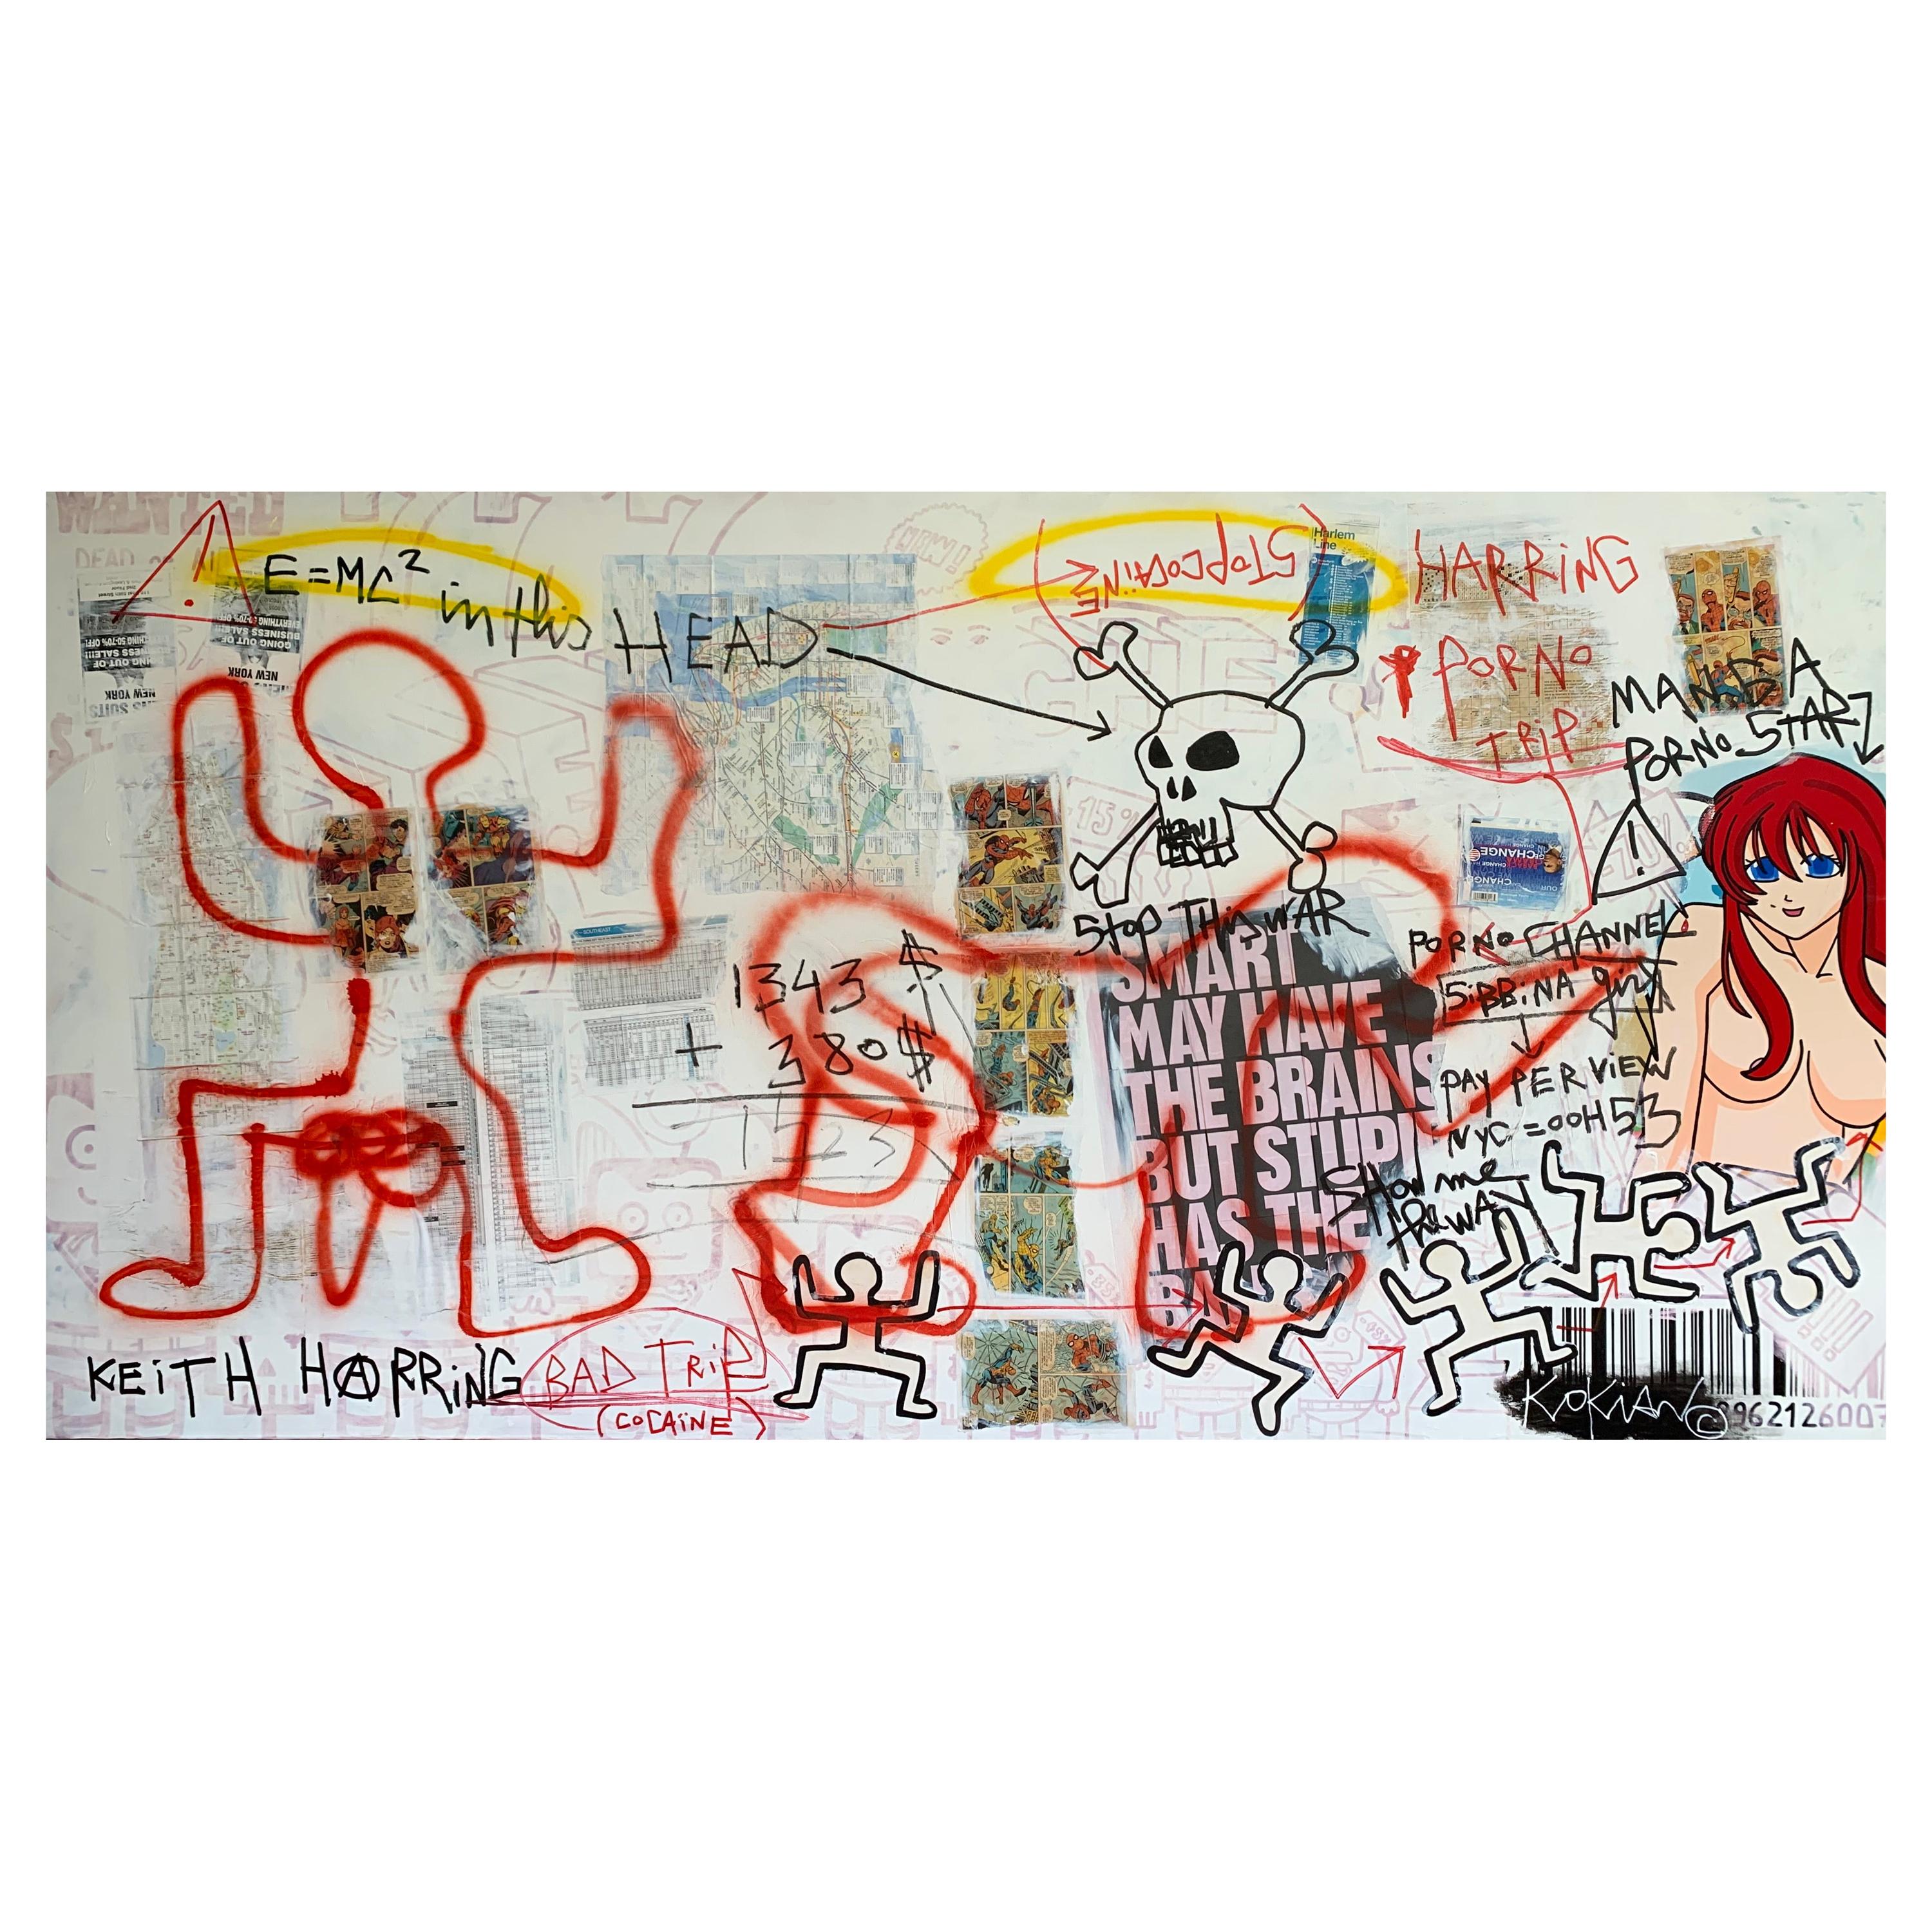 Kokian Painting, "  Keith Harring bad trip " White, 2010